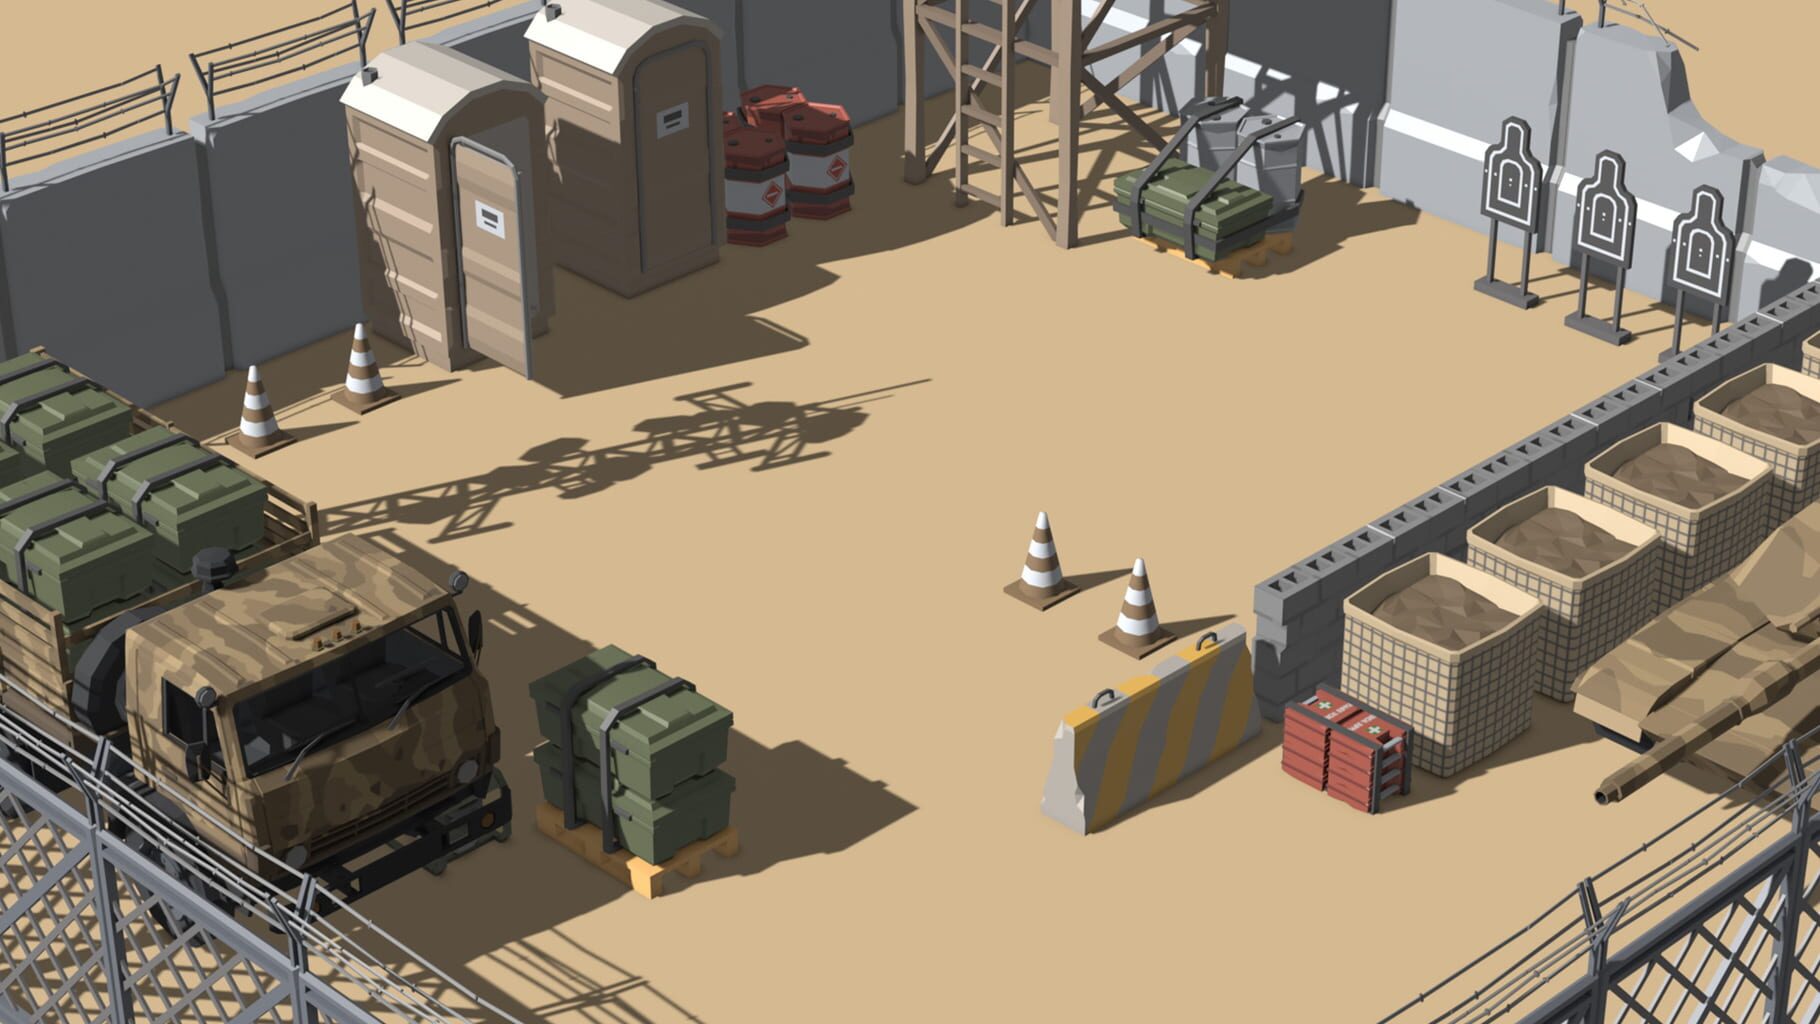 Forklift Extreme: Military Storage artwork